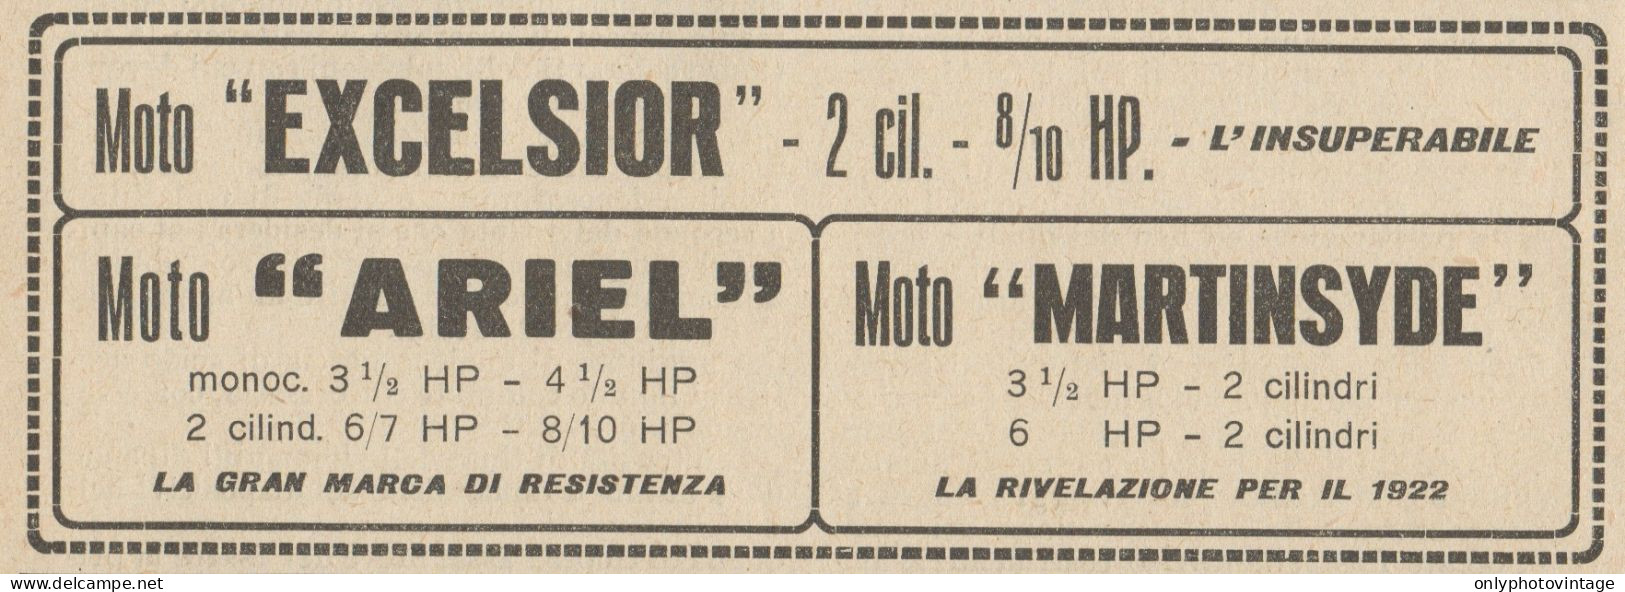 Moto EXCELSIOR, ARIEL & MARTINSYDE - Pubblicità D'epoca - 1922 Old Advert - Pubblicitari